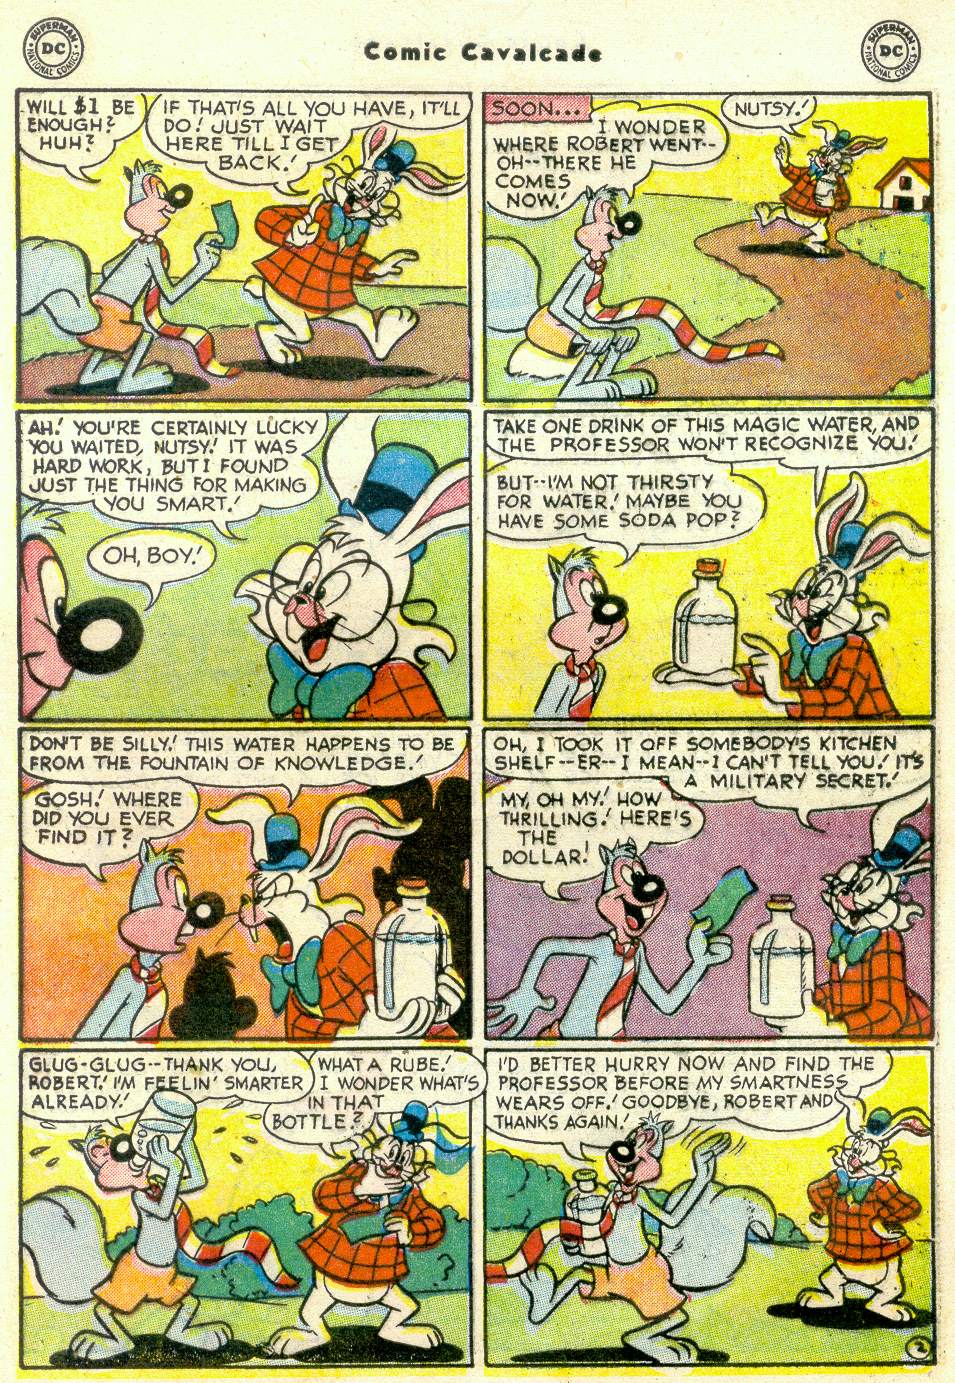 Comic Cavalcade issue 49 - Page 63